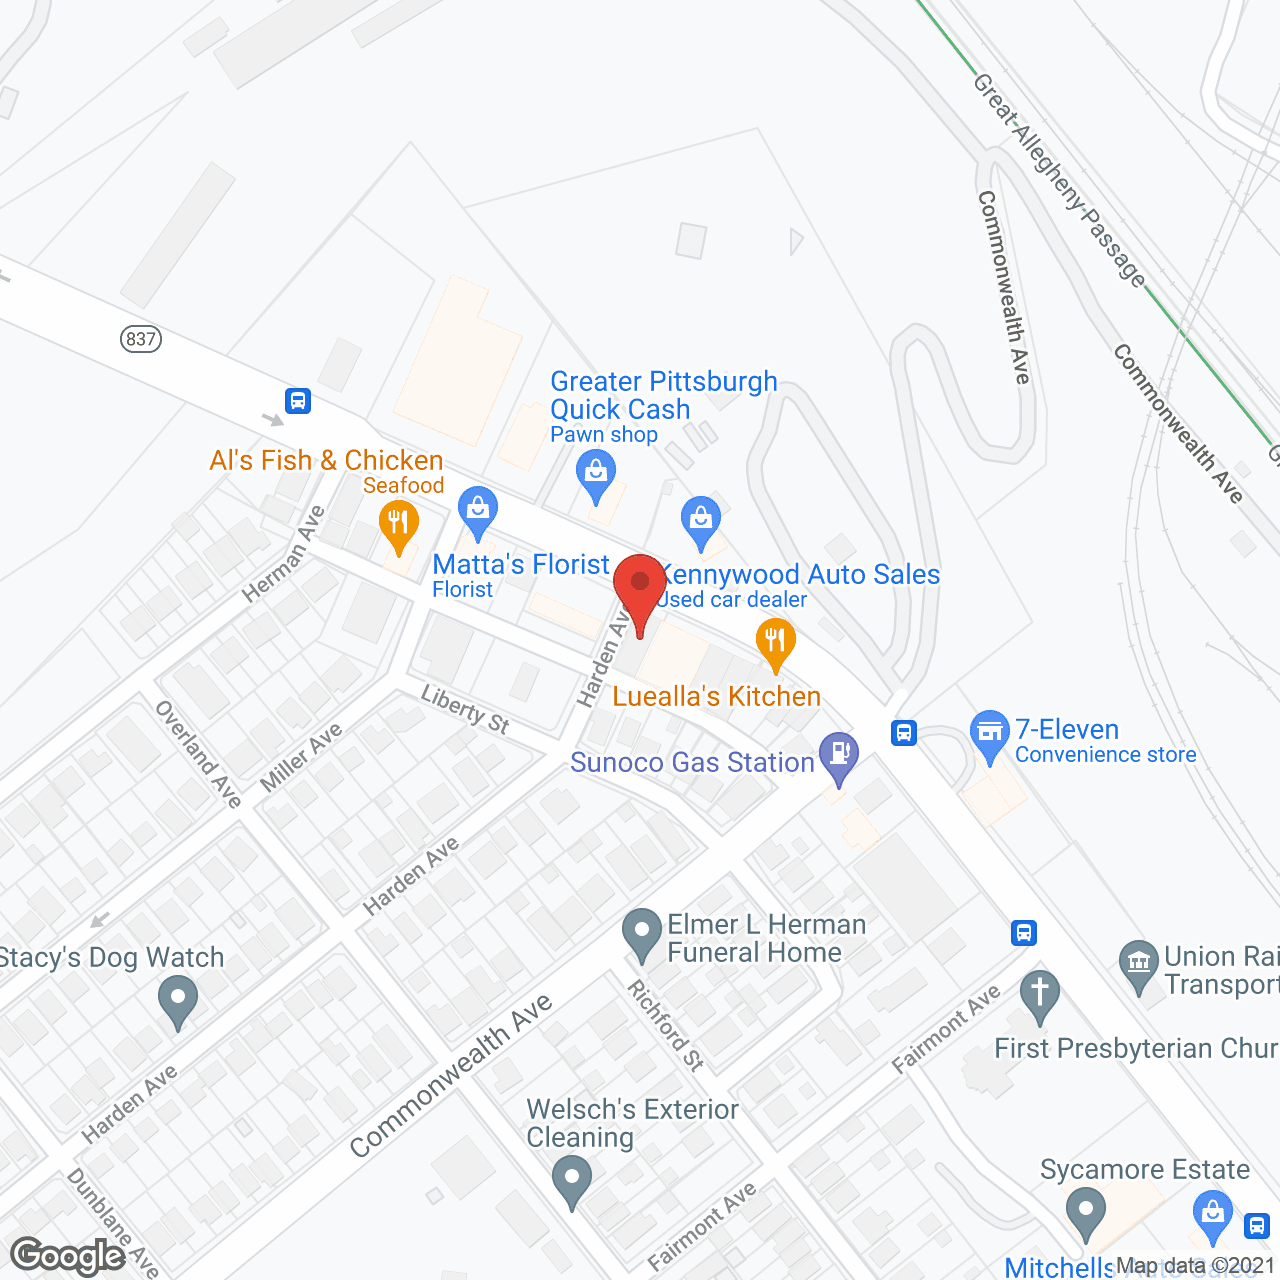 Sycamore Estate in google map